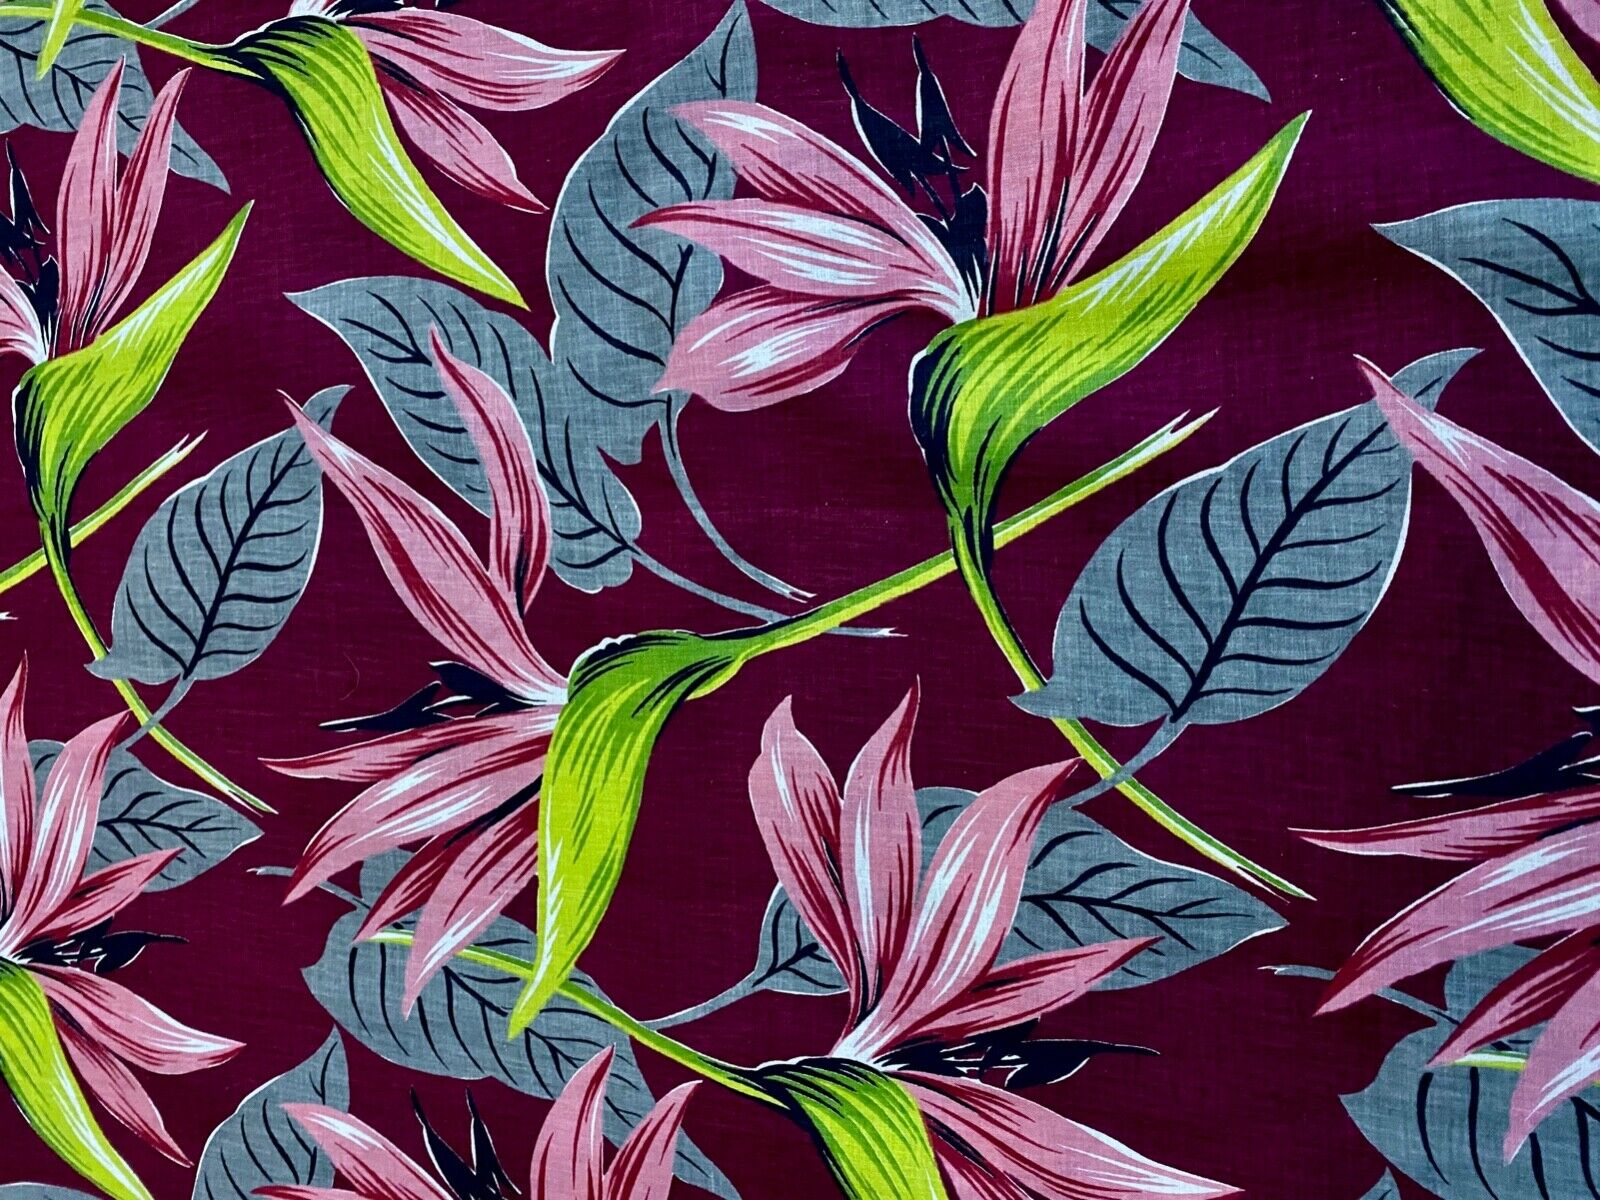 Miami 30's Electric Bird of Paradise on Raspberry Barkcloth Era Vintage Fabric